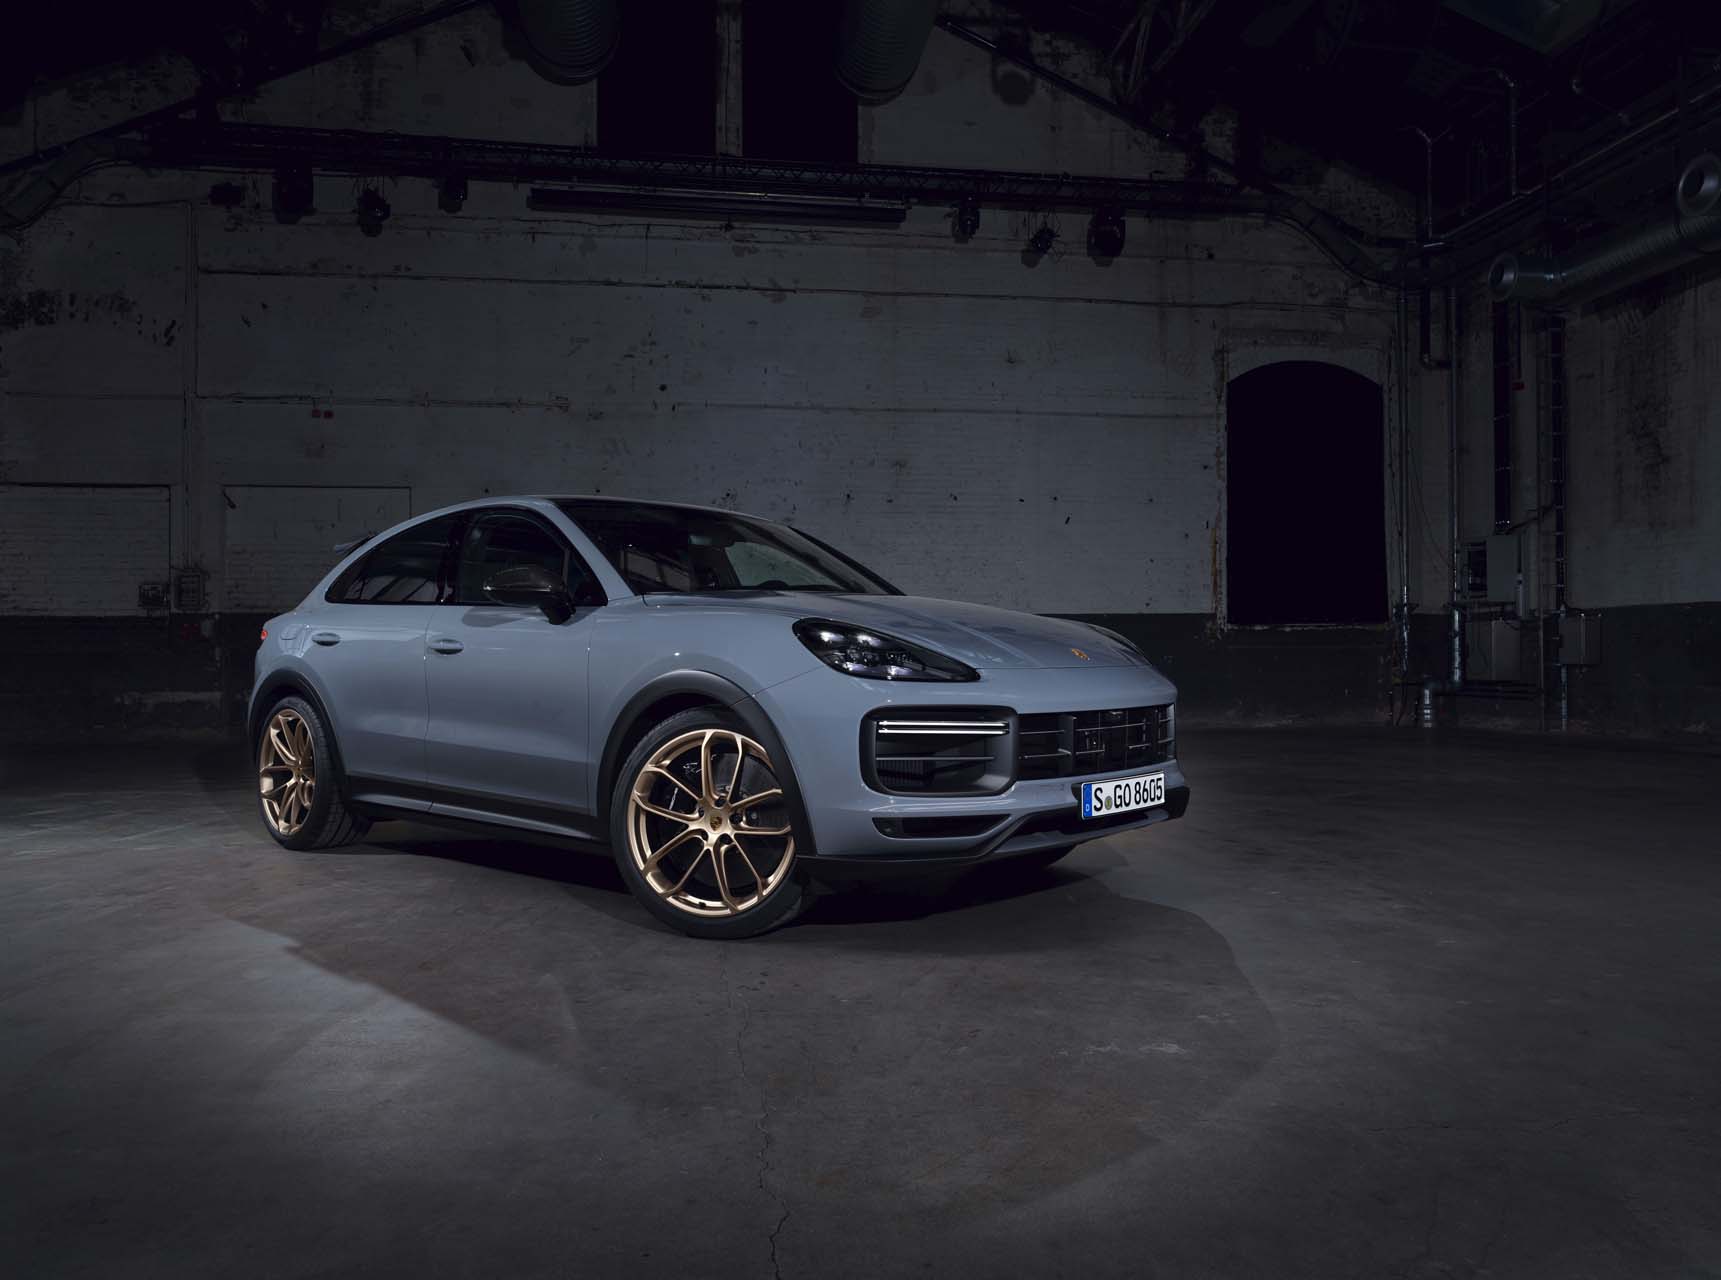 Porsche Cayenne Coupe 2020 revealed - Car News